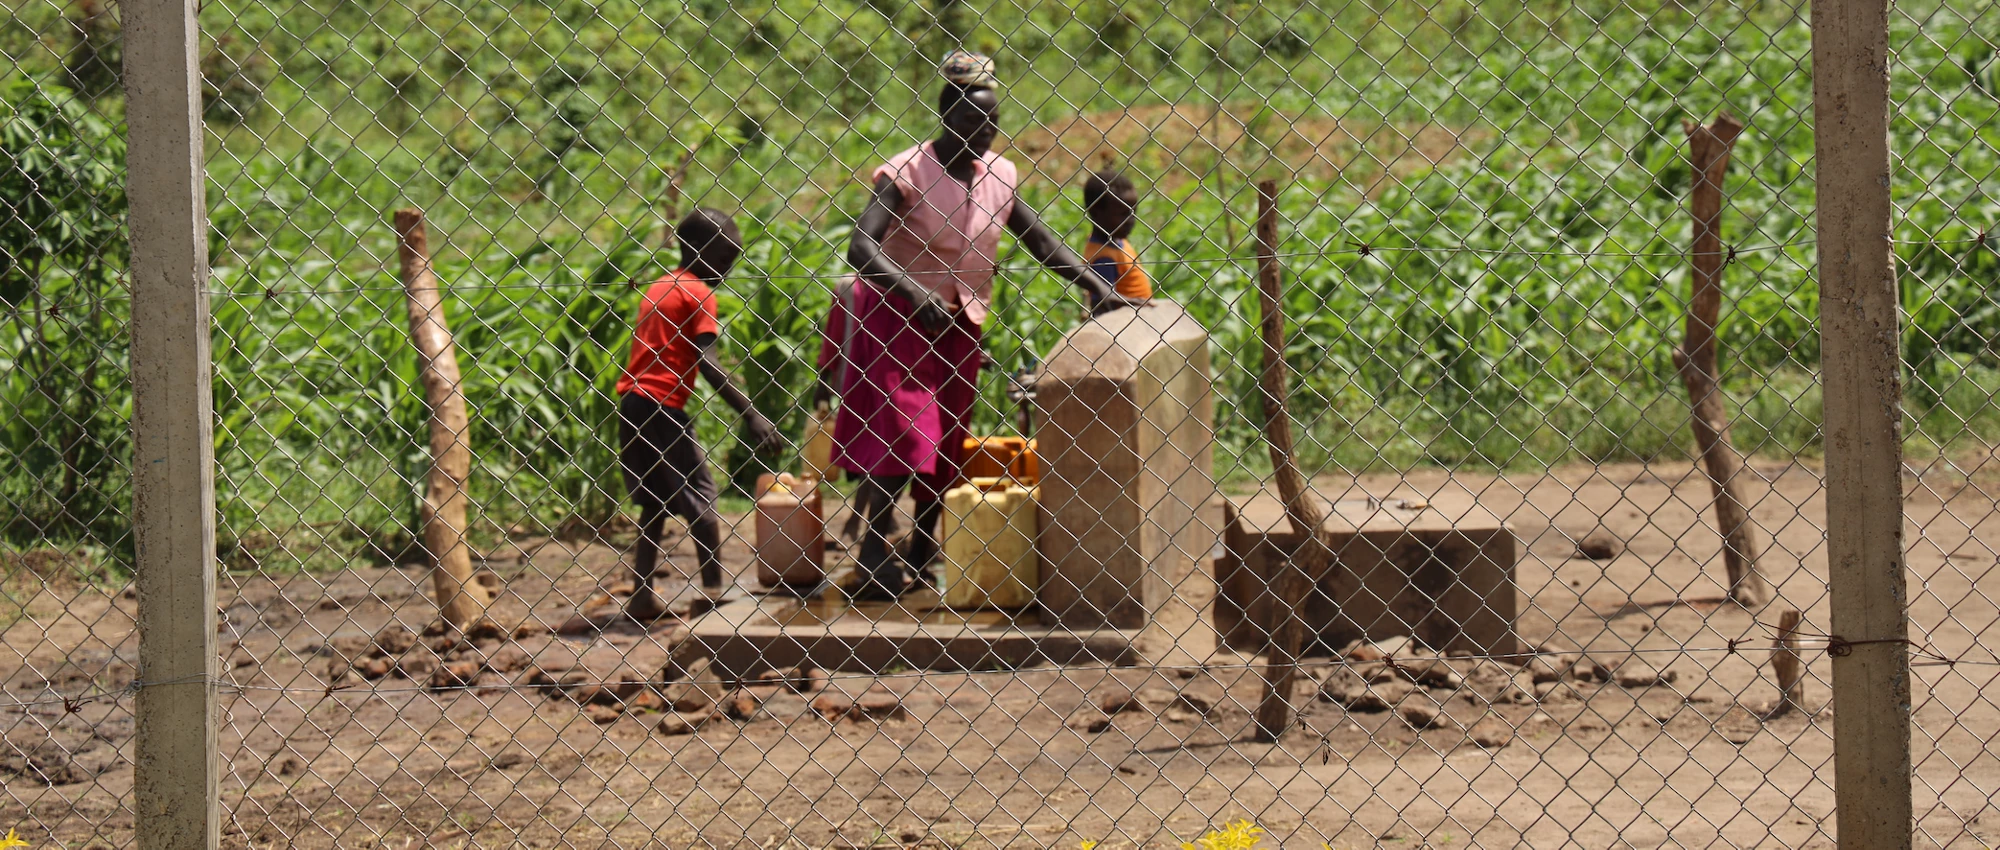 Collecting Water in Uganda. World Bank